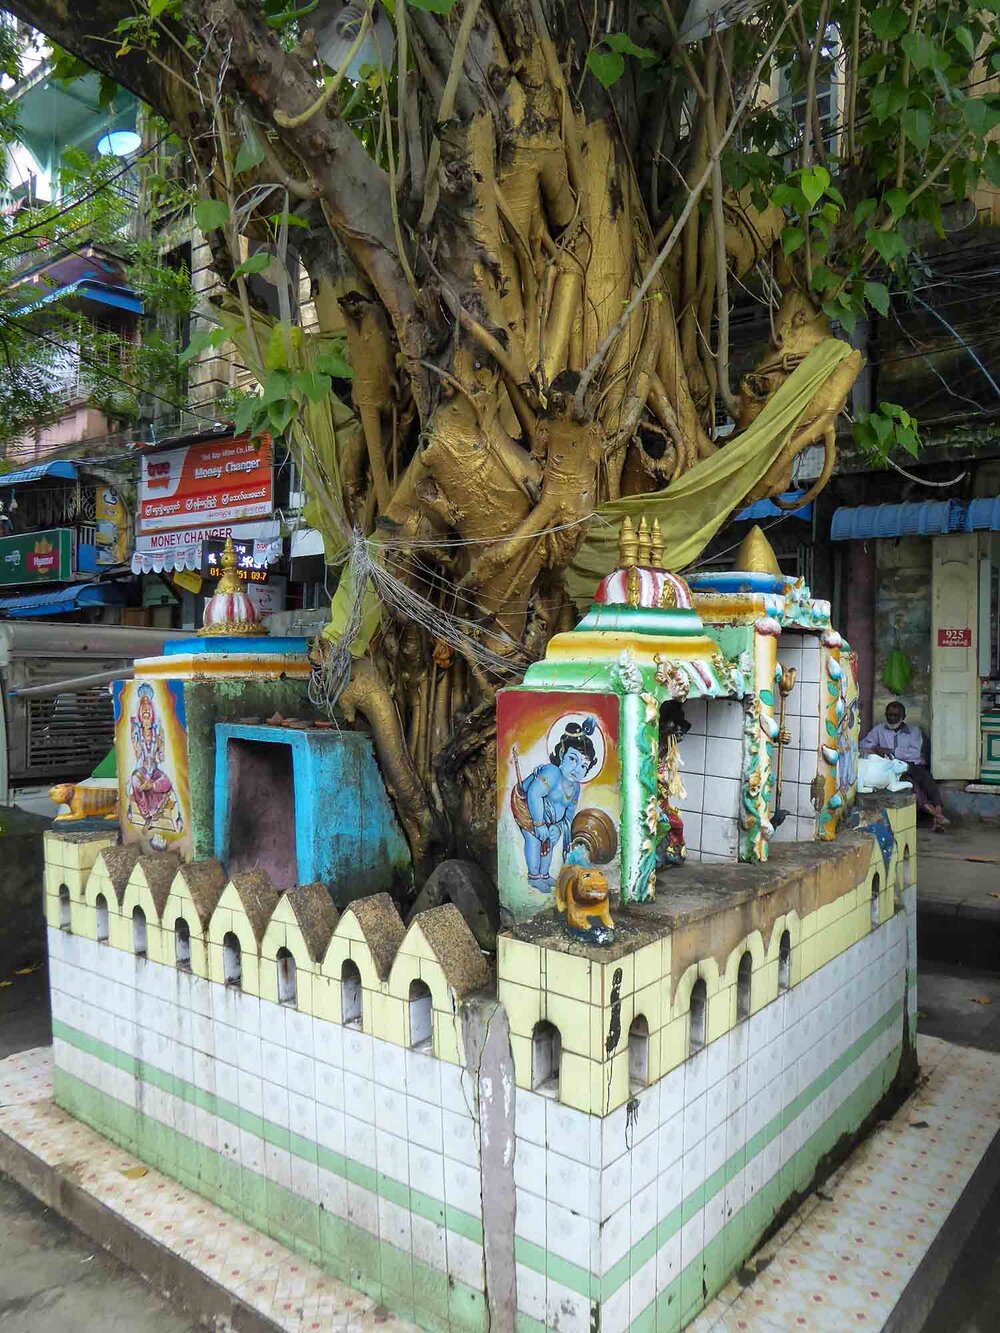 Hindu shrine in street at base of large Fig tree